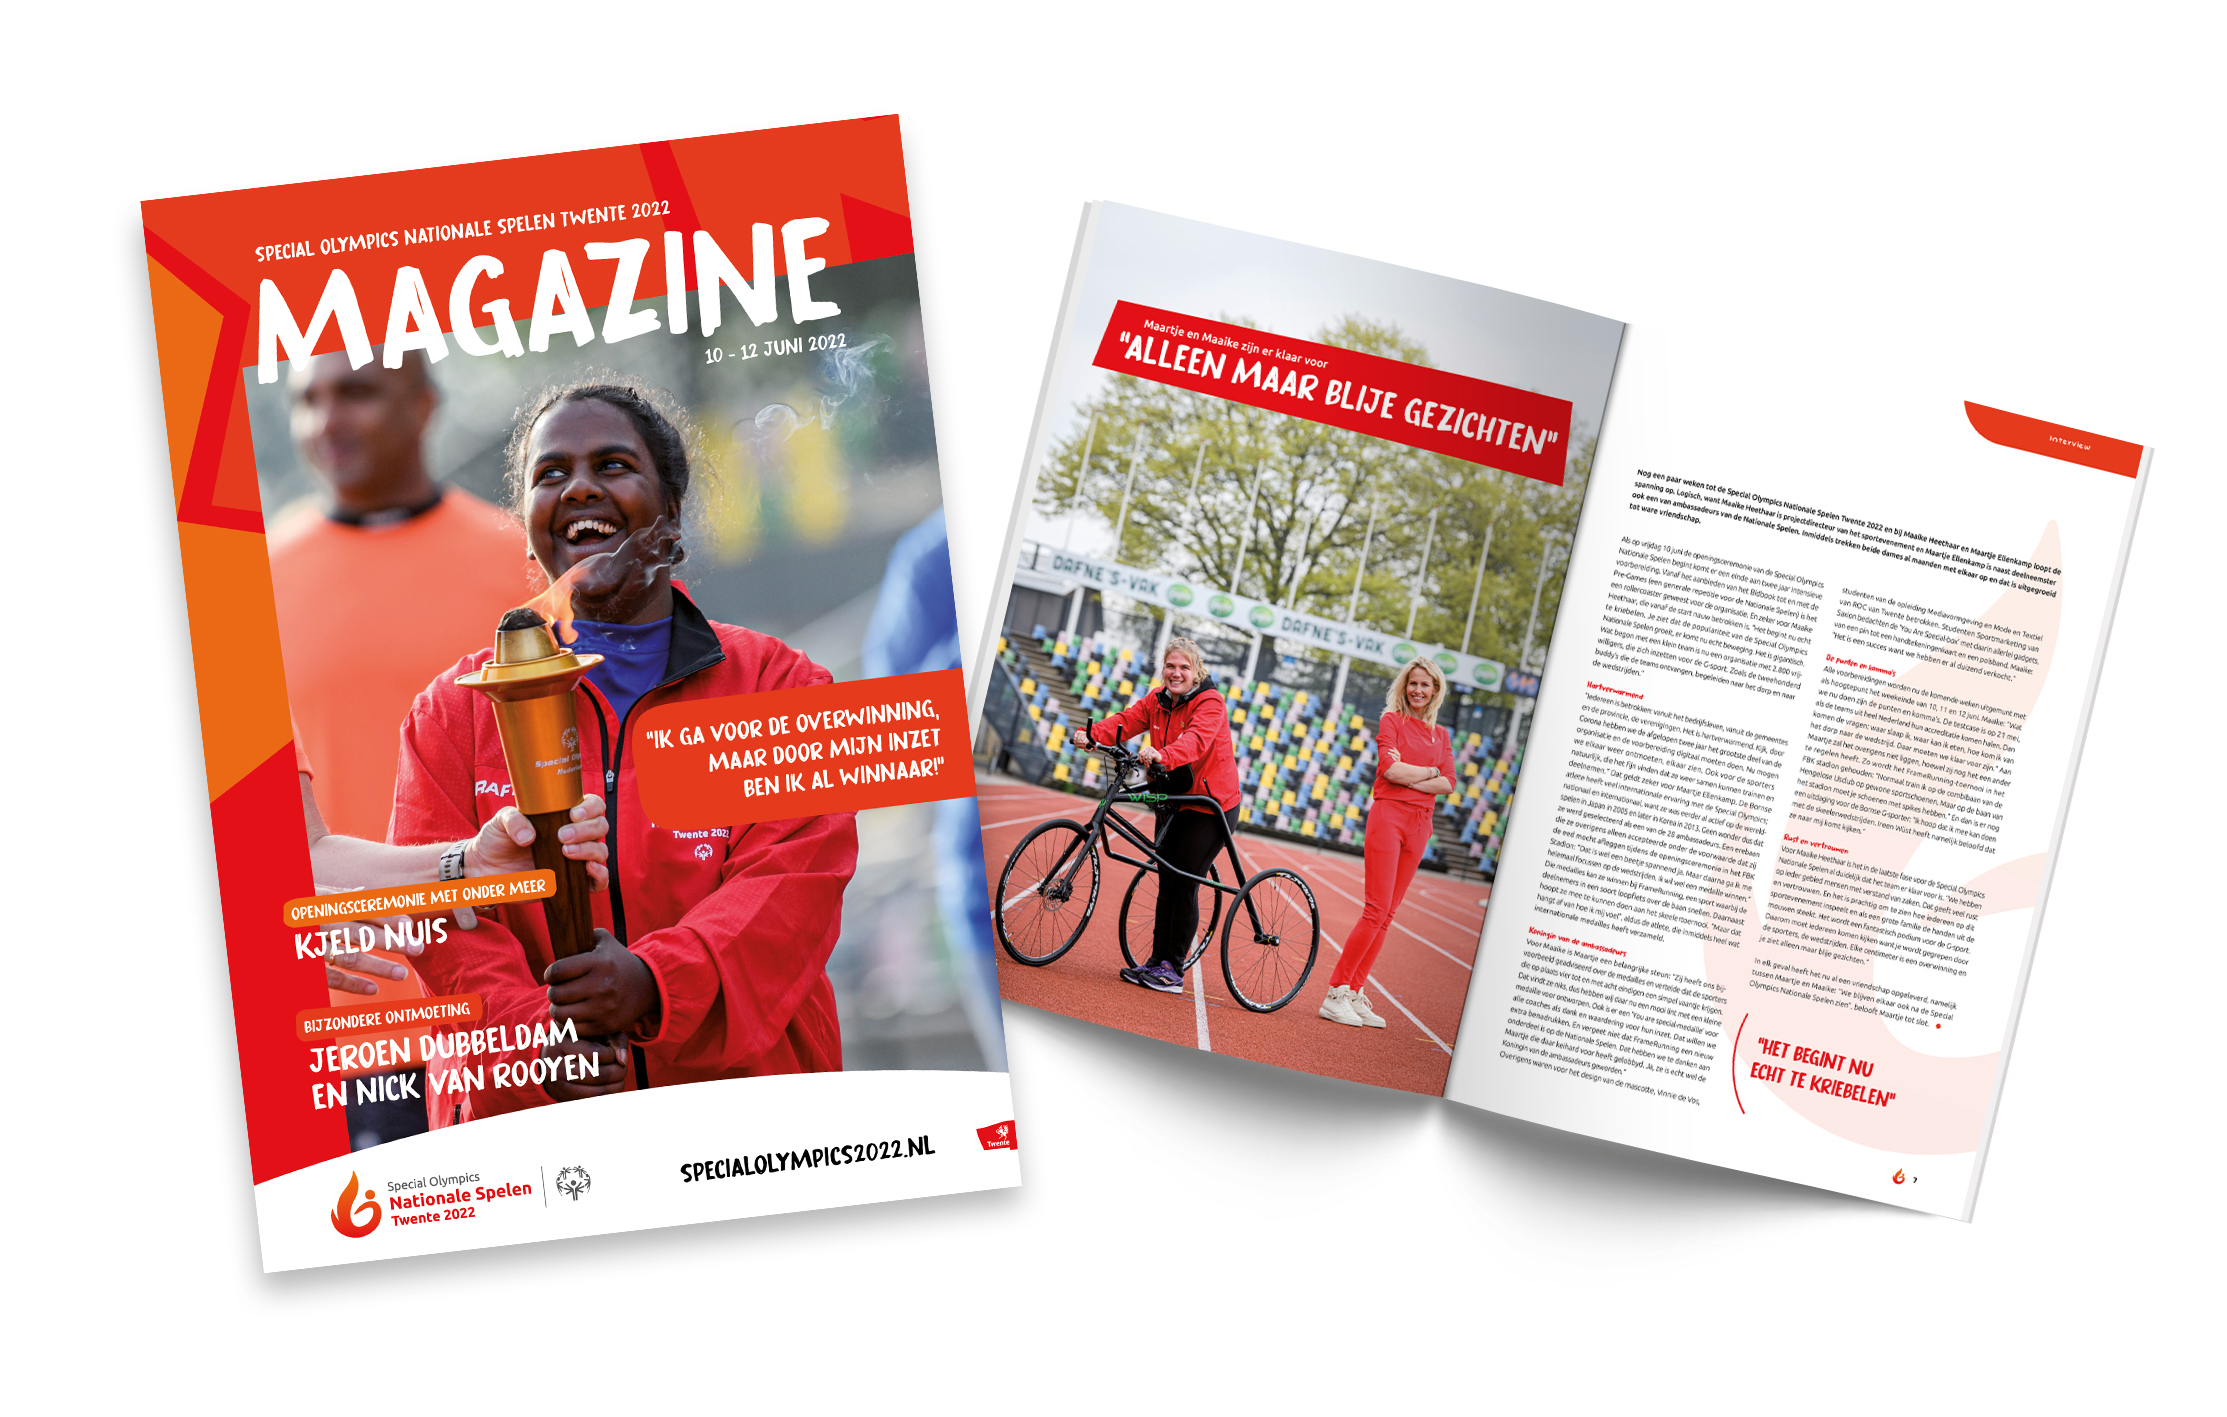 Special Olympics Nationale Spelen Twente 2022 Magazine